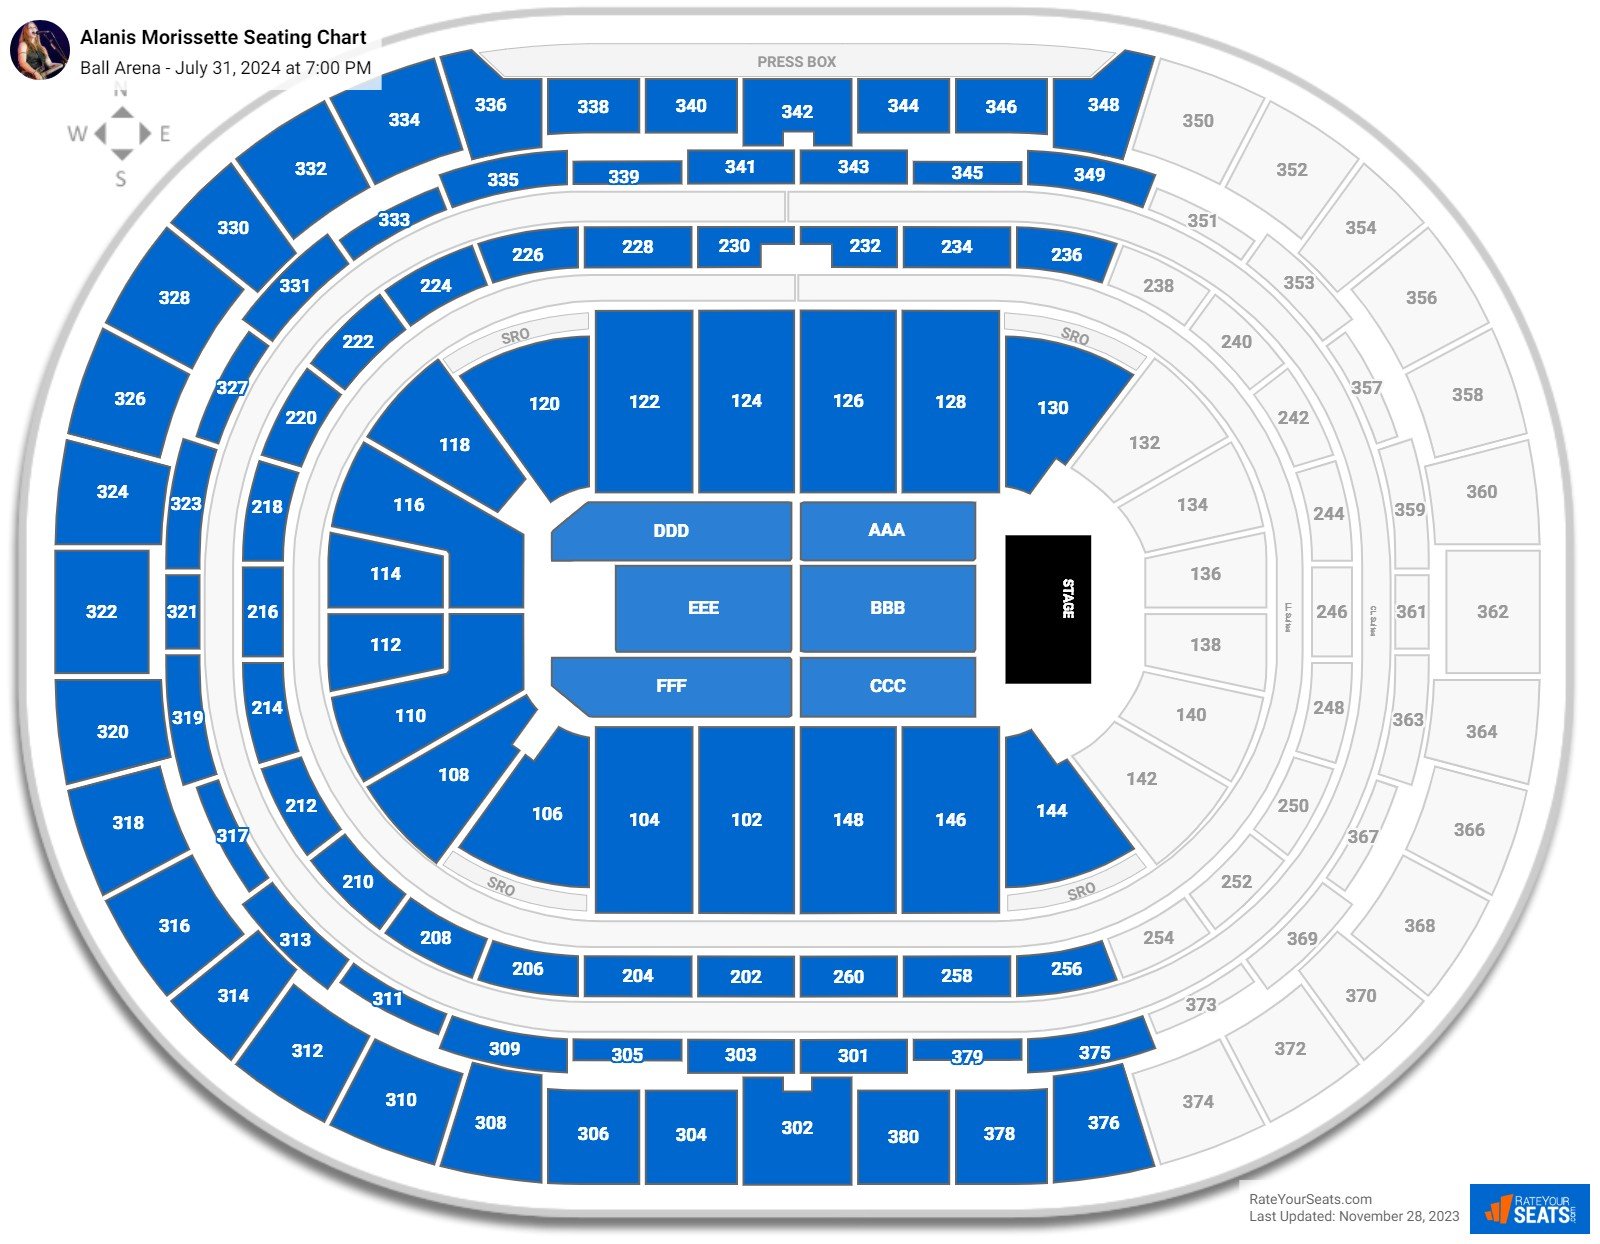 Ball Arena Concert Seating Chart